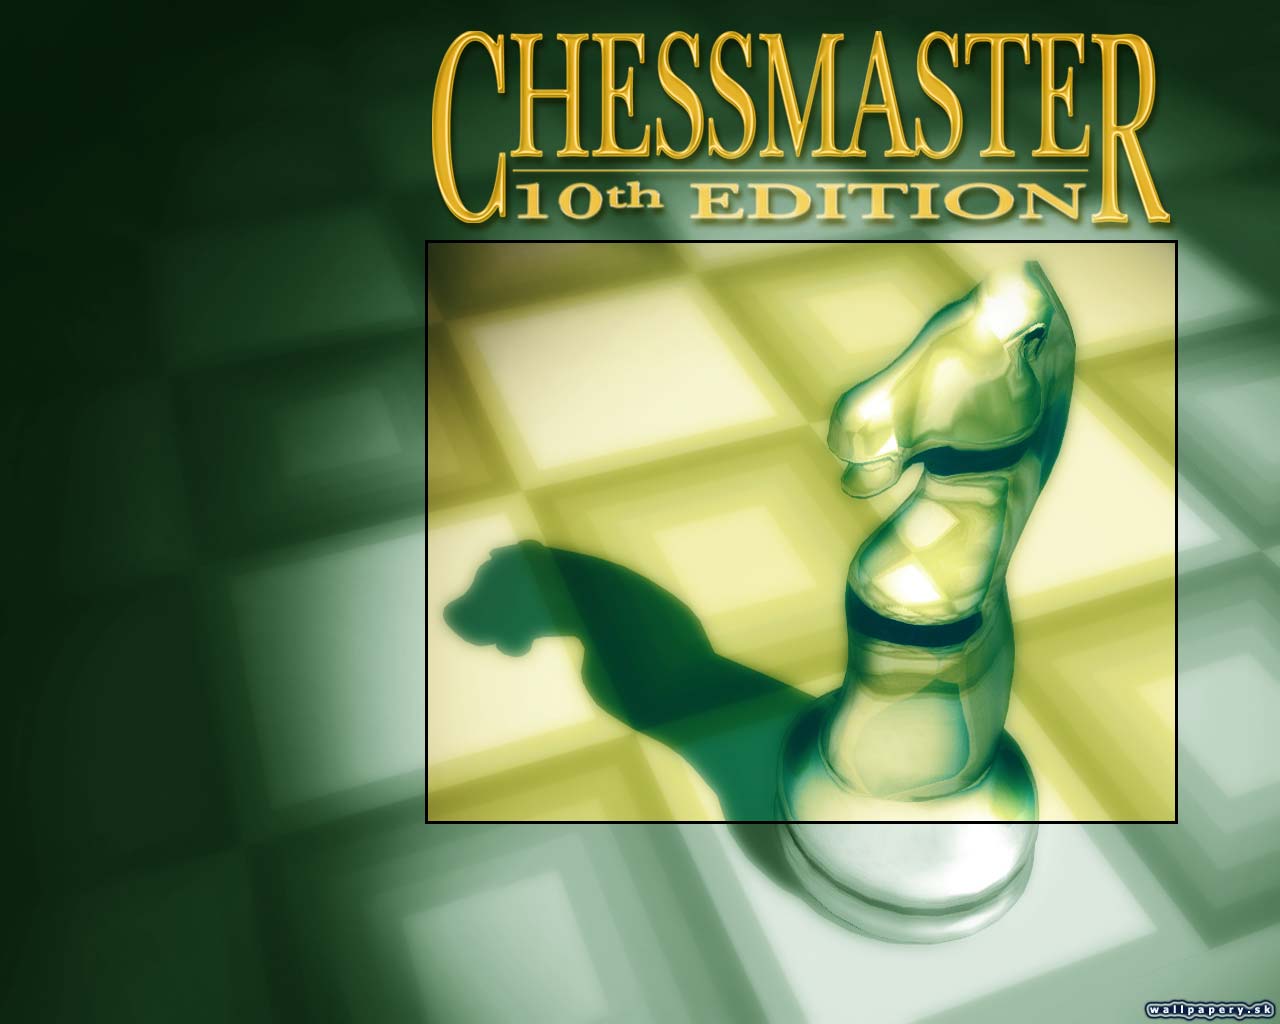 Chessmaster 10th Edition - wallpaper 1